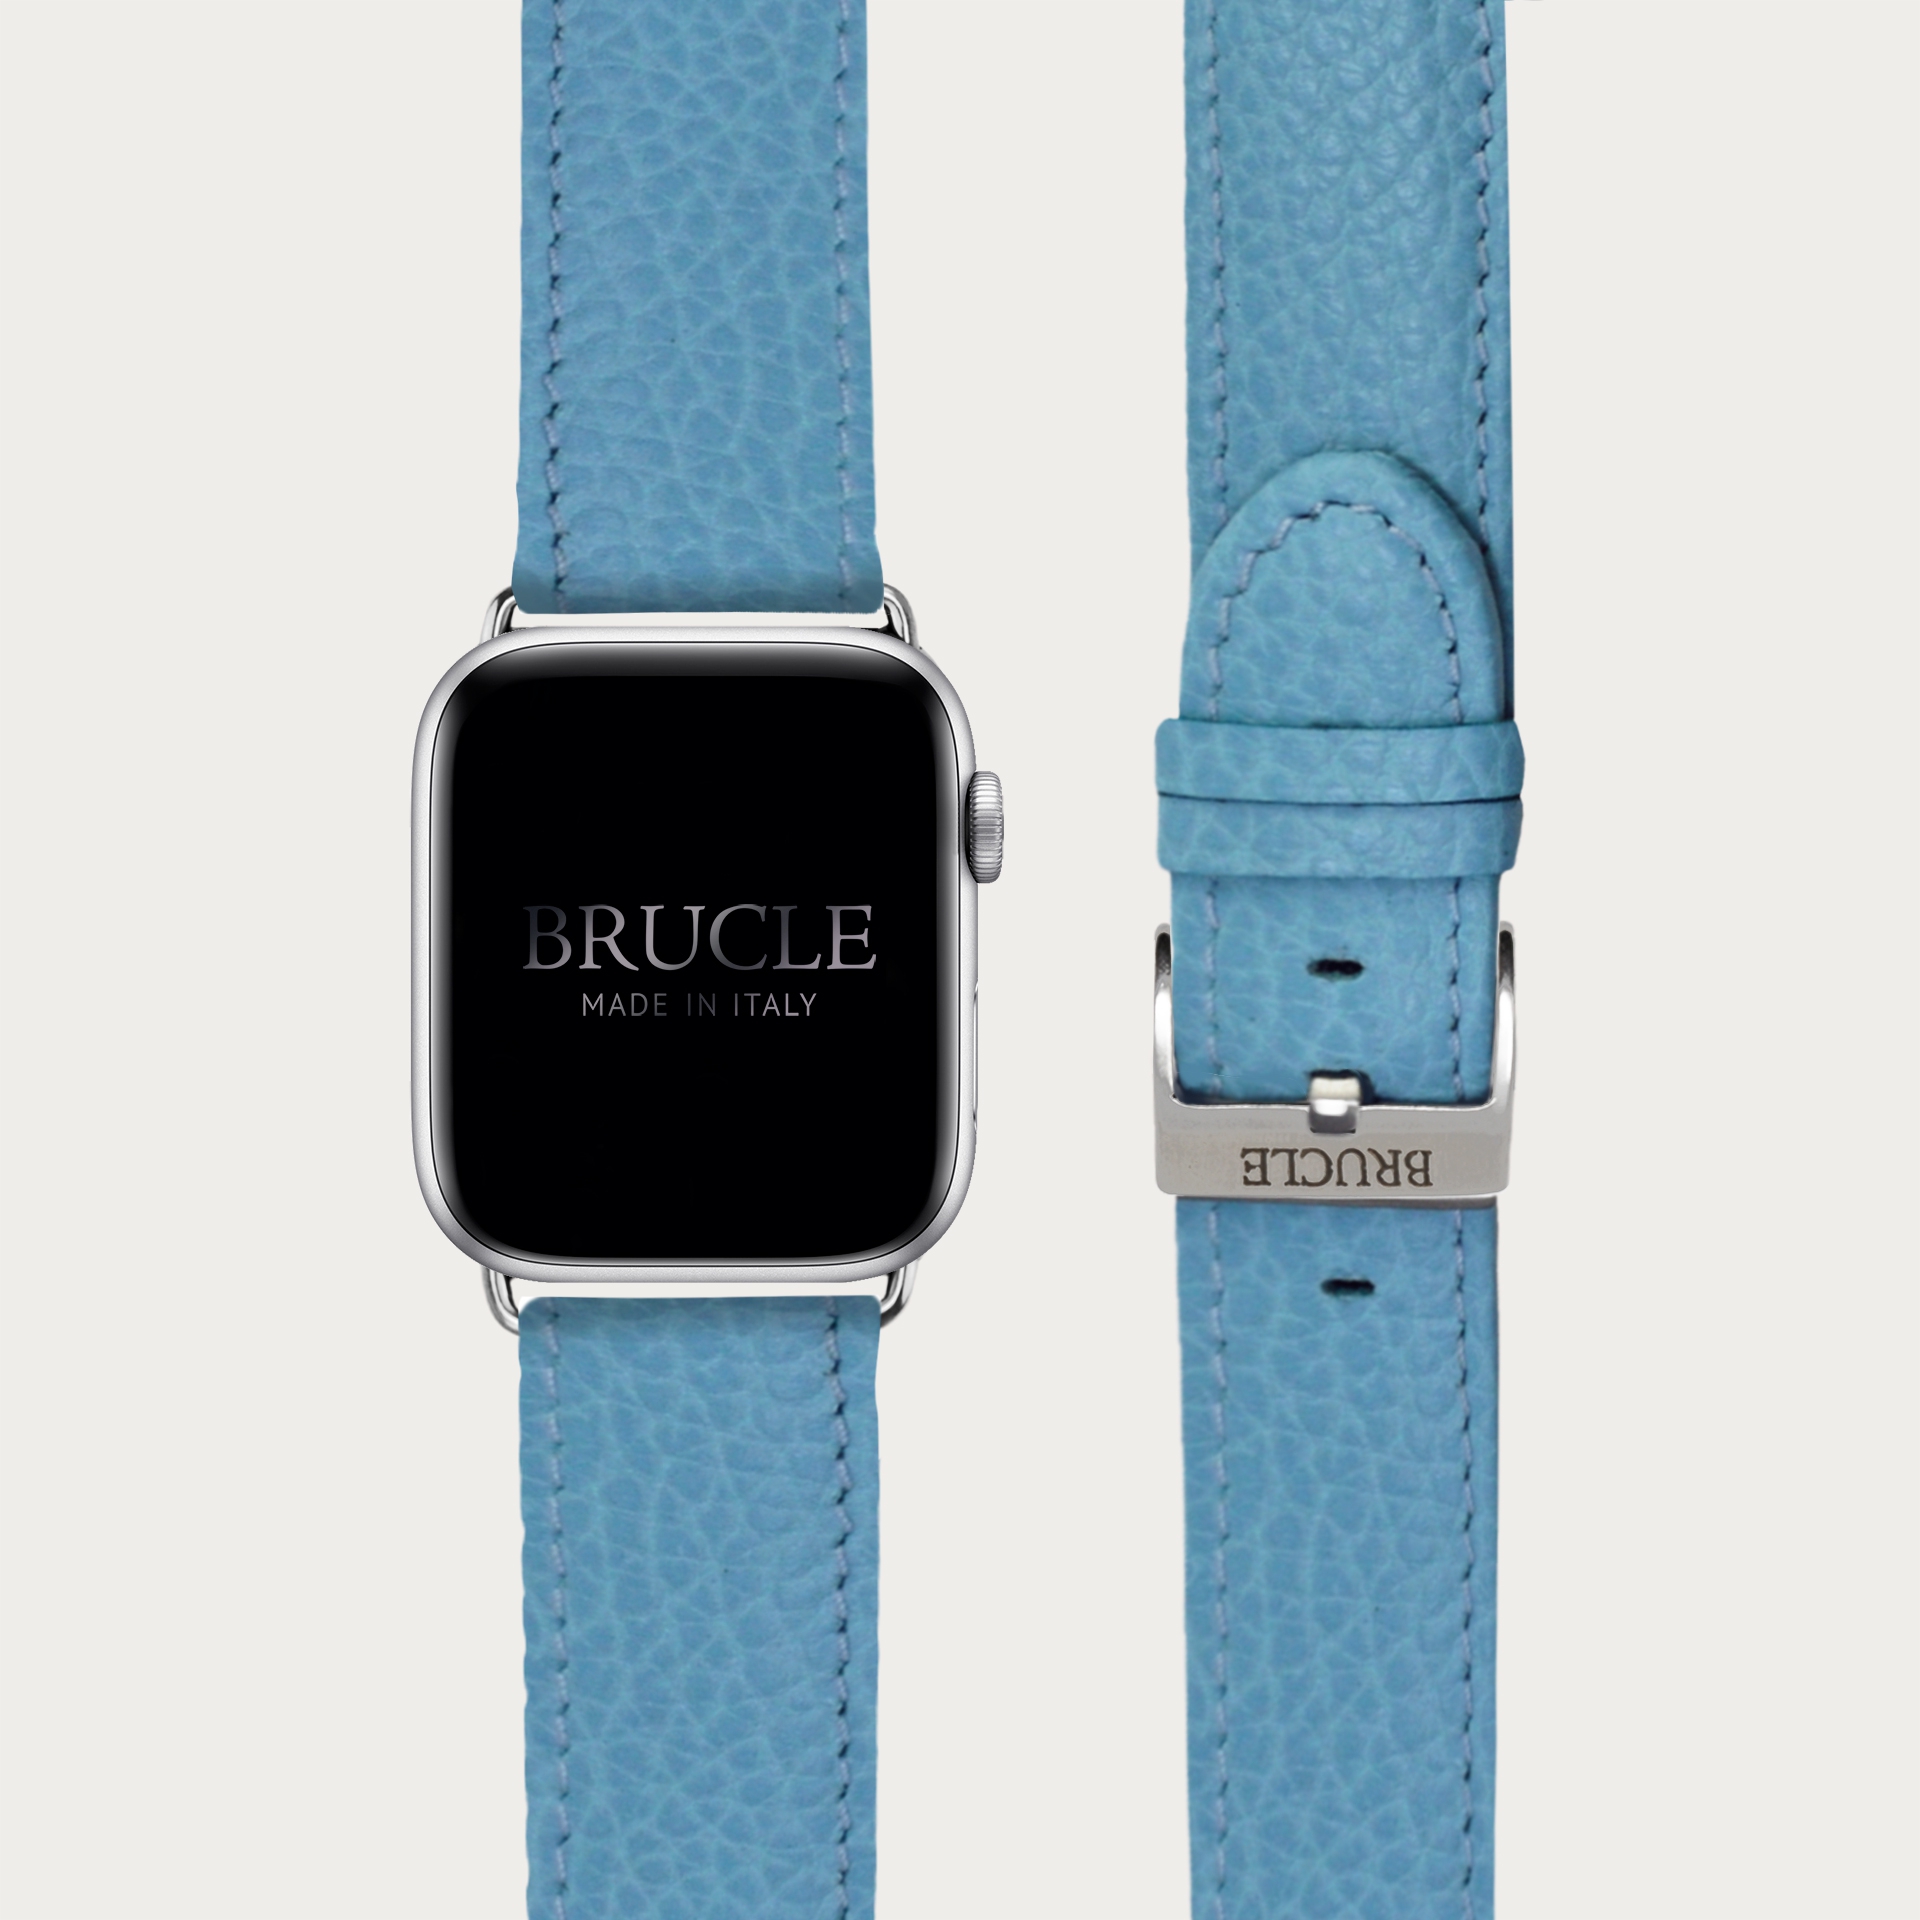 Armband kompatibel mit Apple Watch / Samsung Smartwatch, Hellblau, leder mit print